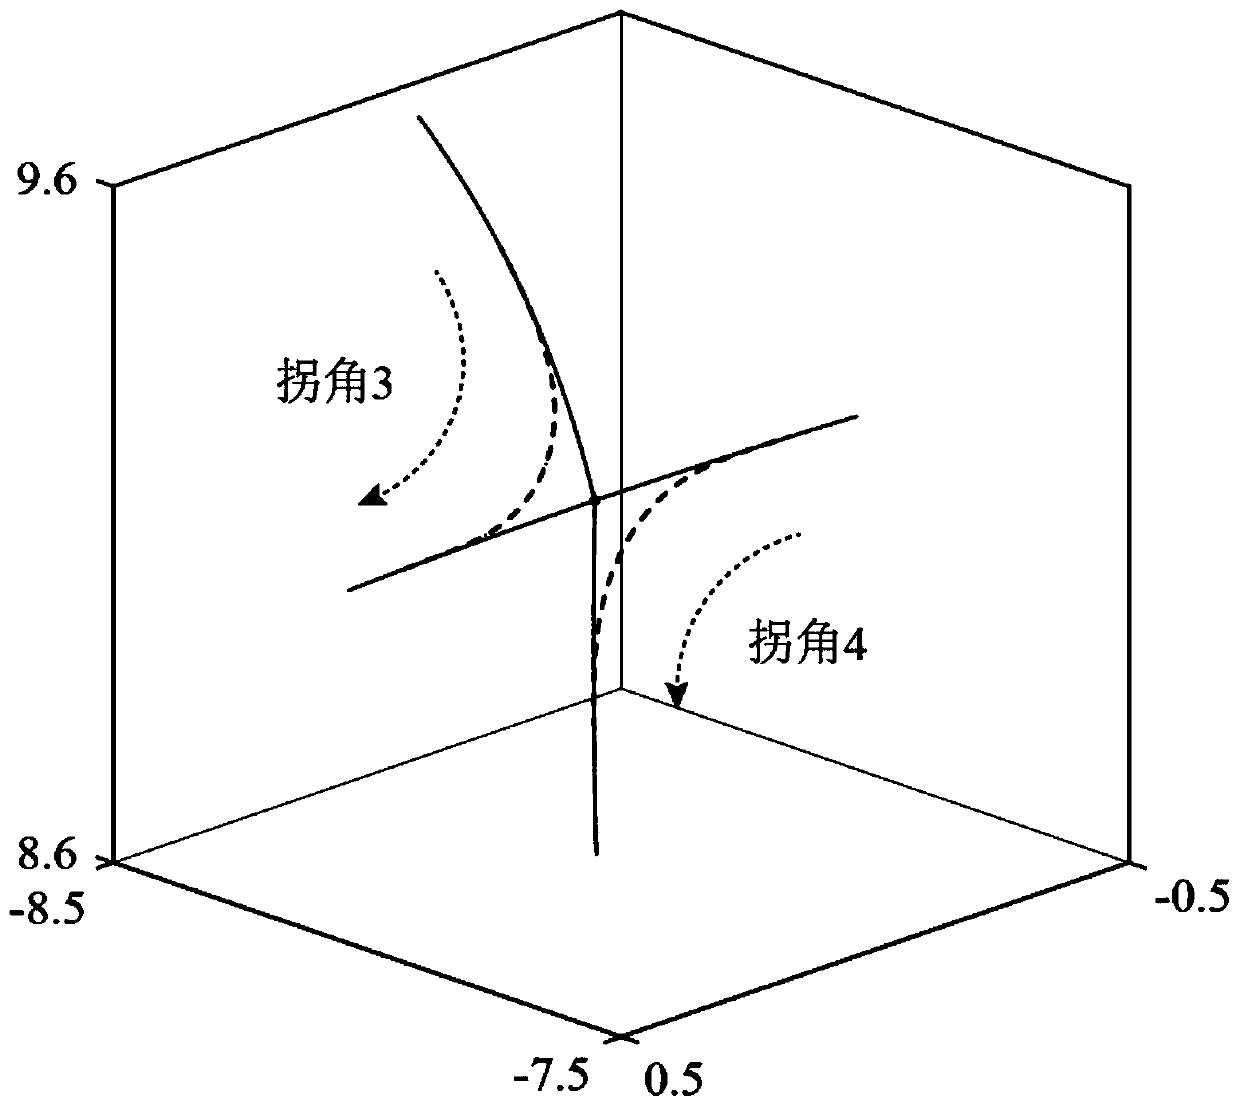 Space corner smoothing method based on three-dimensional generalized Euler spiral